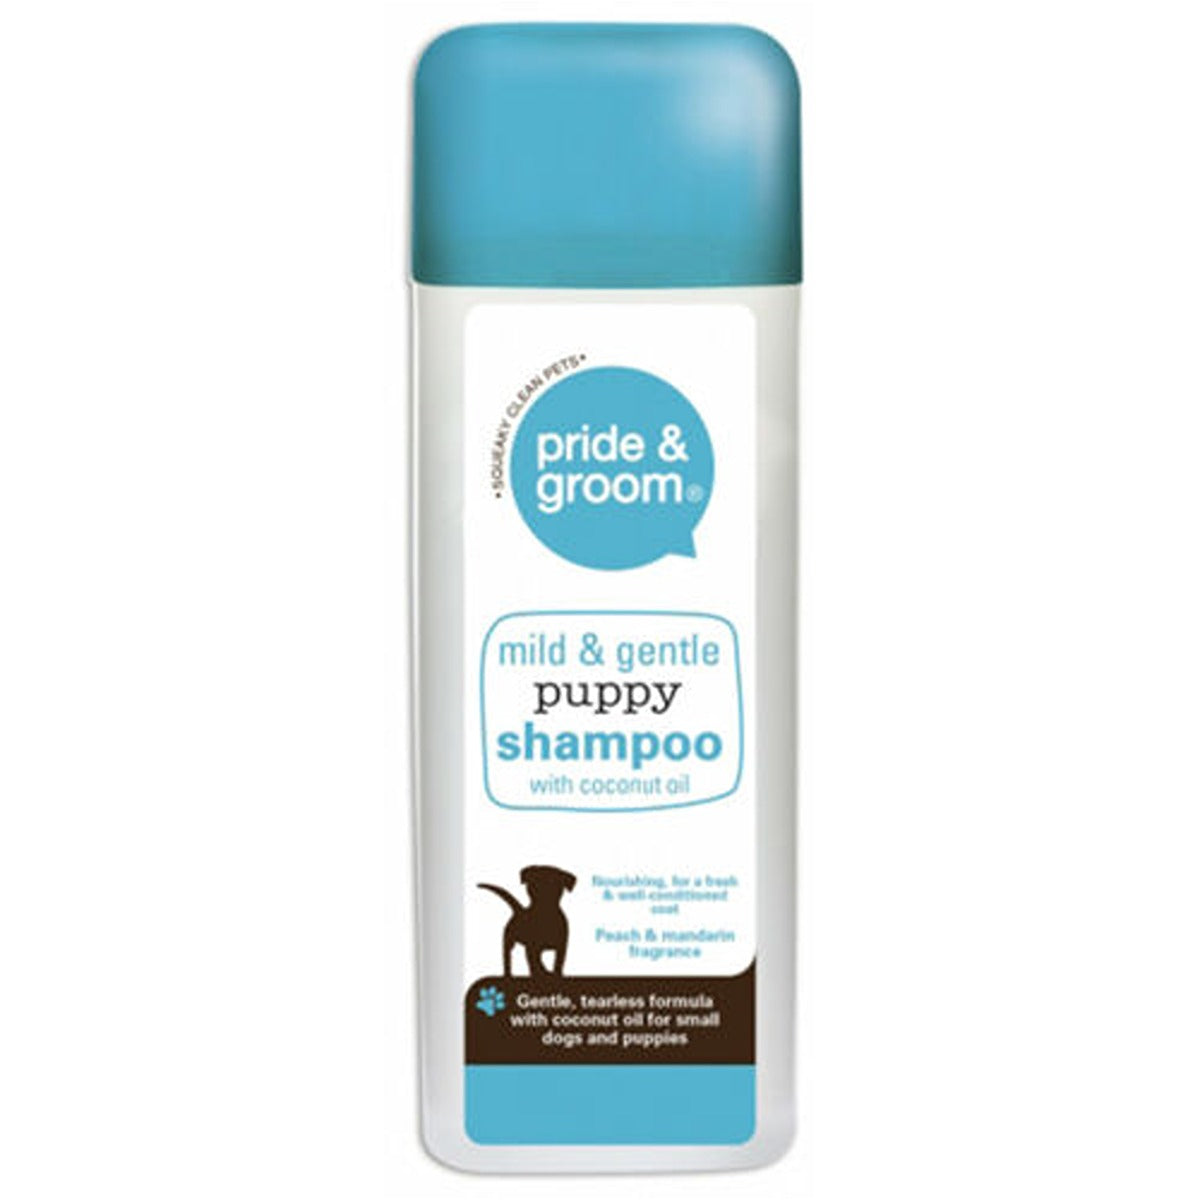 Pride & Groom - Mild & Gentle Puppy Shampoo - 300ml - Continental Food Store